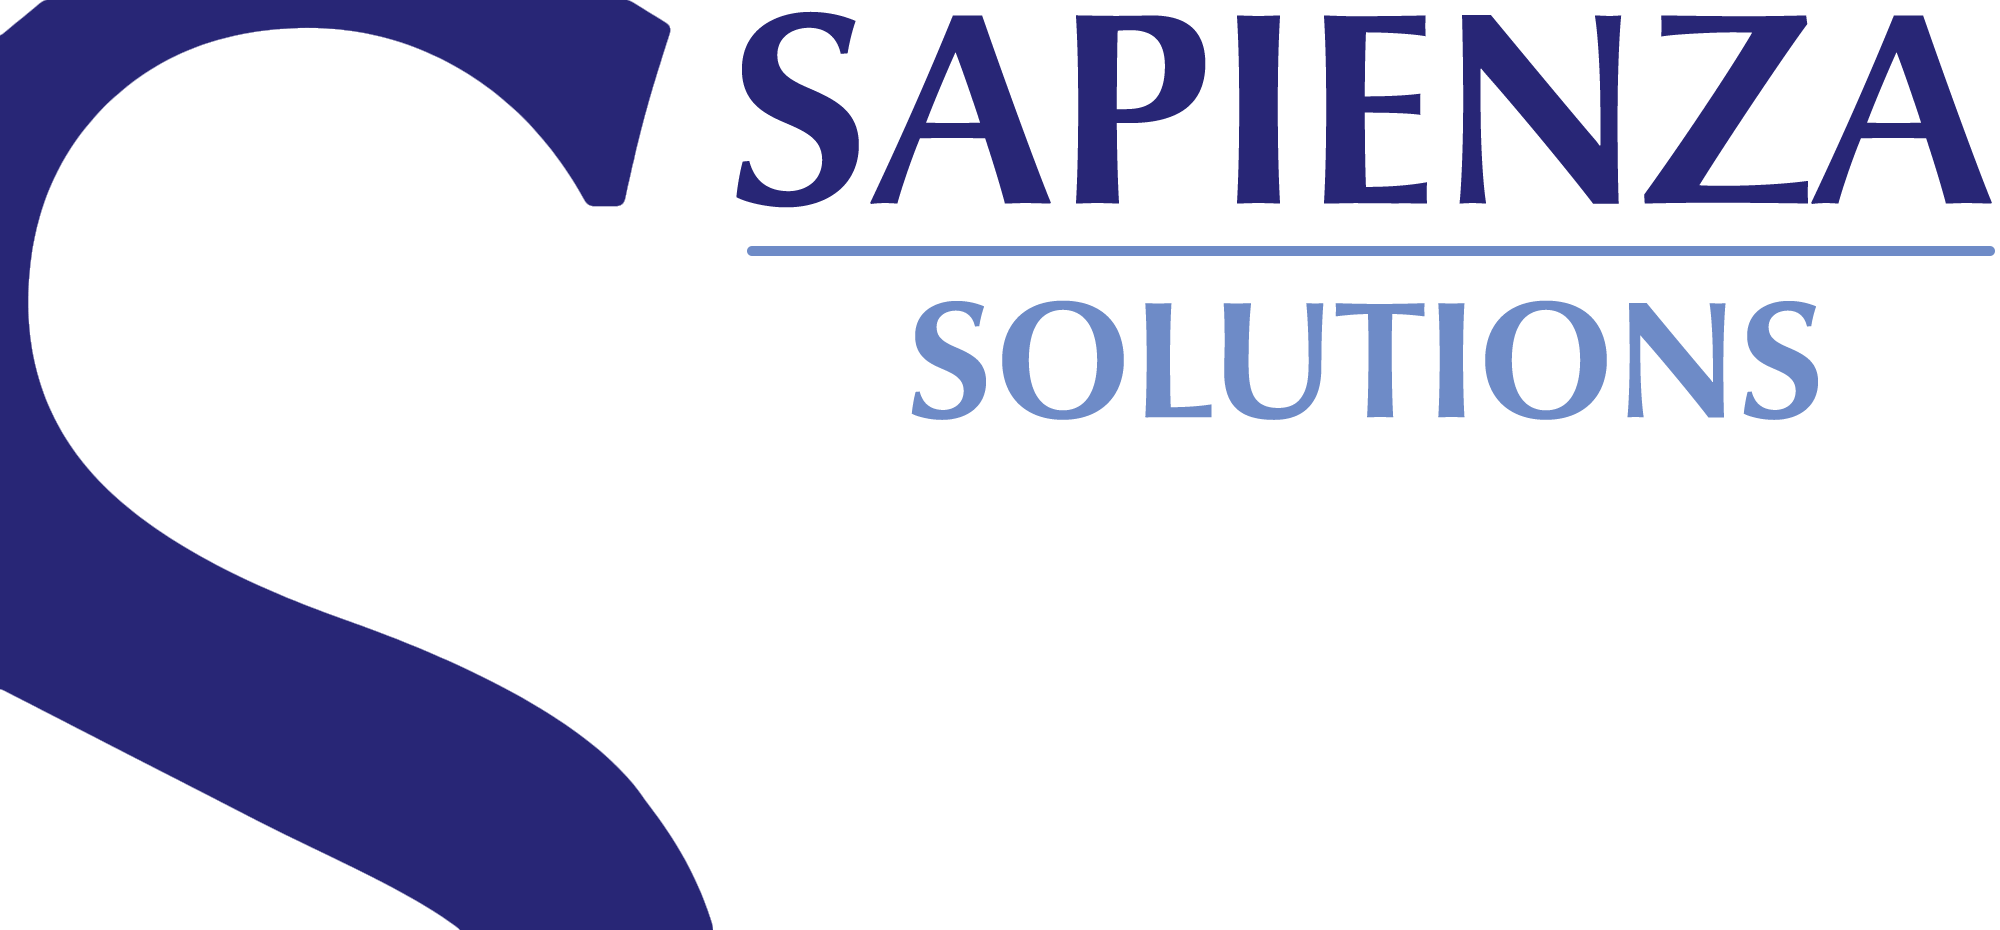 SAPIENZA Solutions